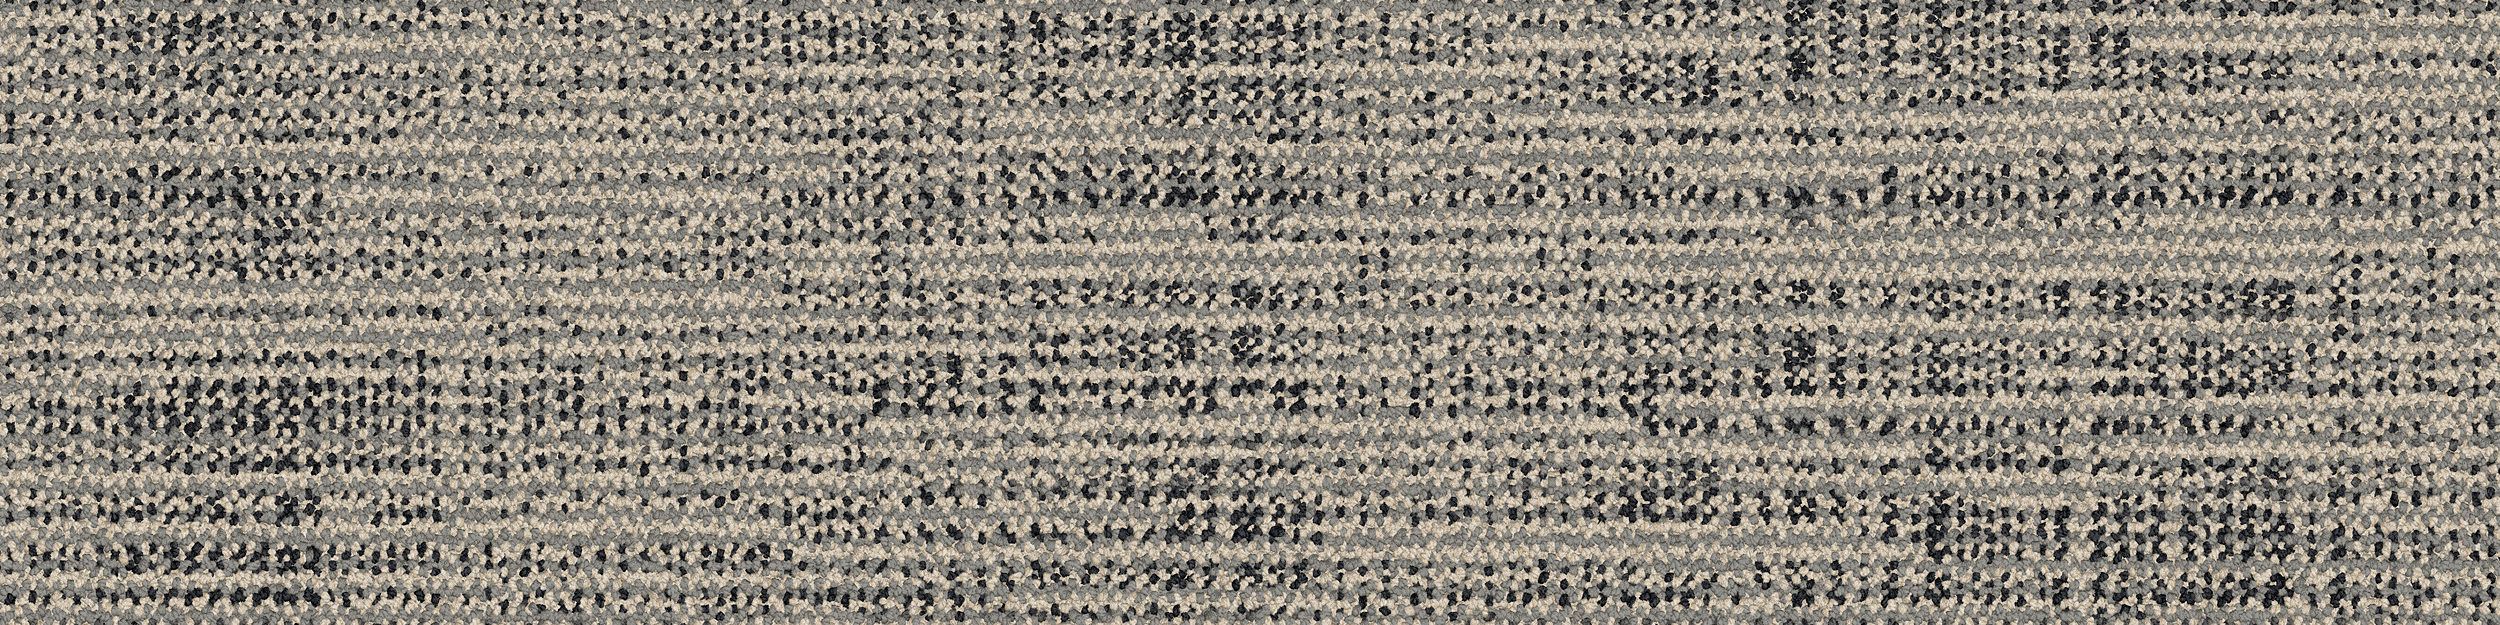 Screen Print Carpet Tile in Linen image number 2